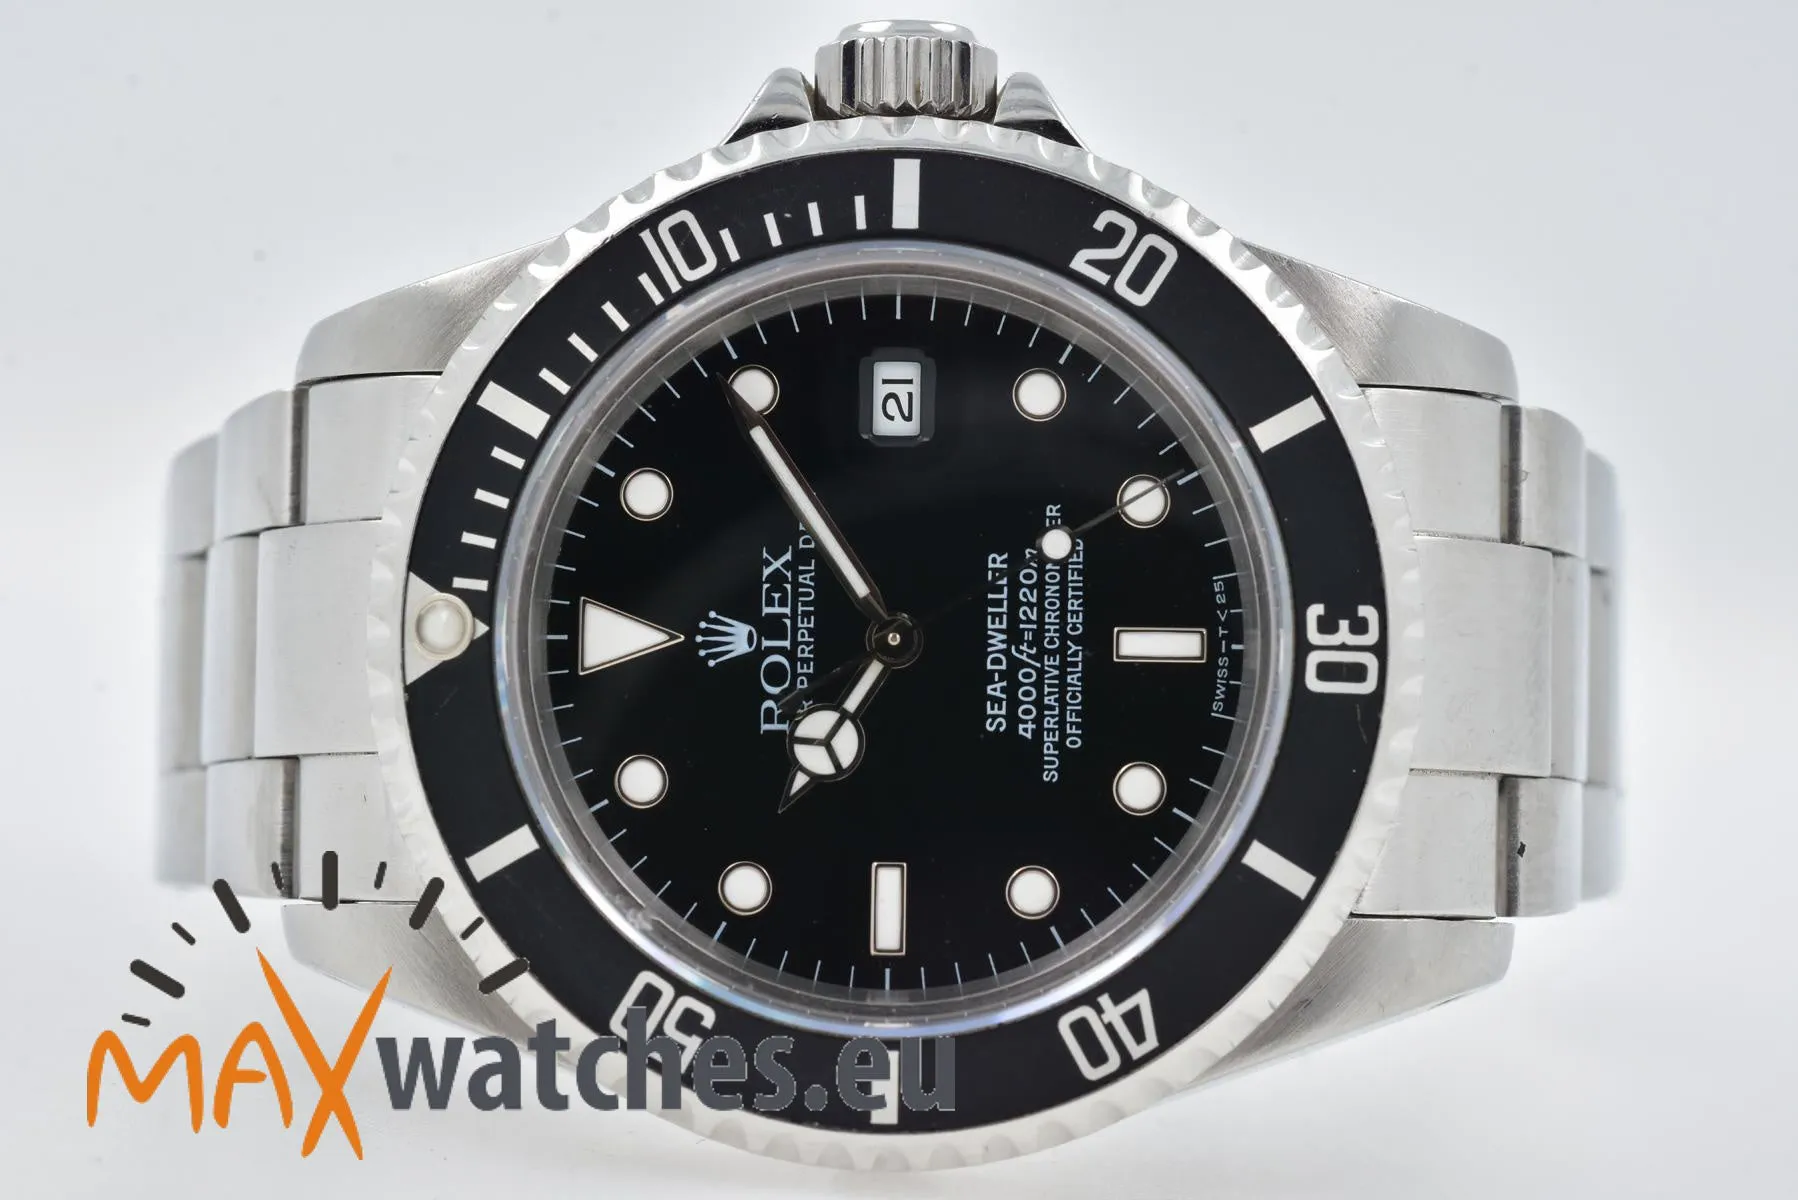 Rolex Sea-Dweller 4000 16600 40mm Stainless steel Black